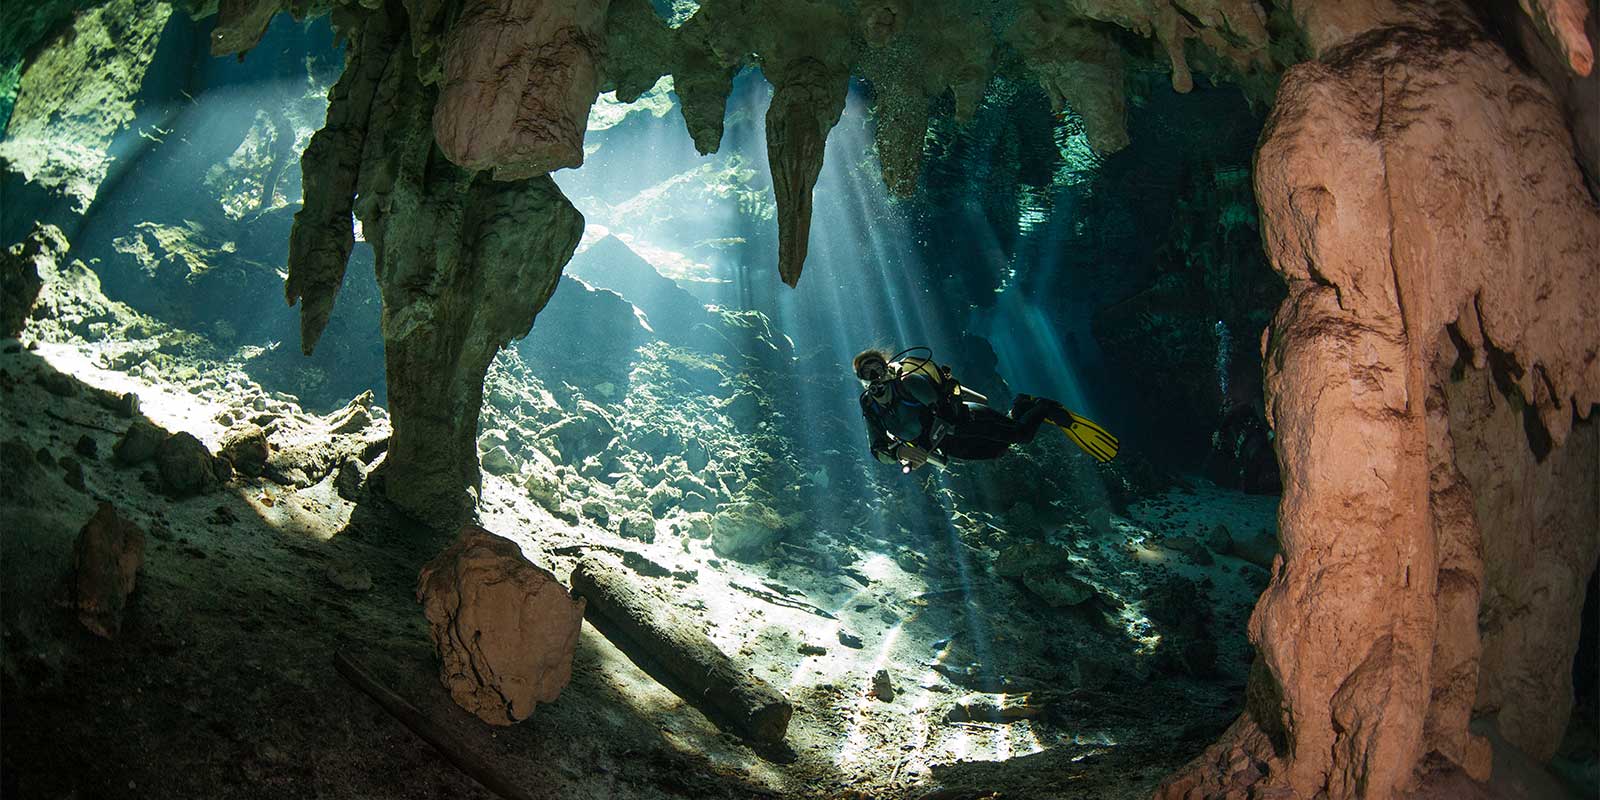 Diver in the Cenotes, Mexico